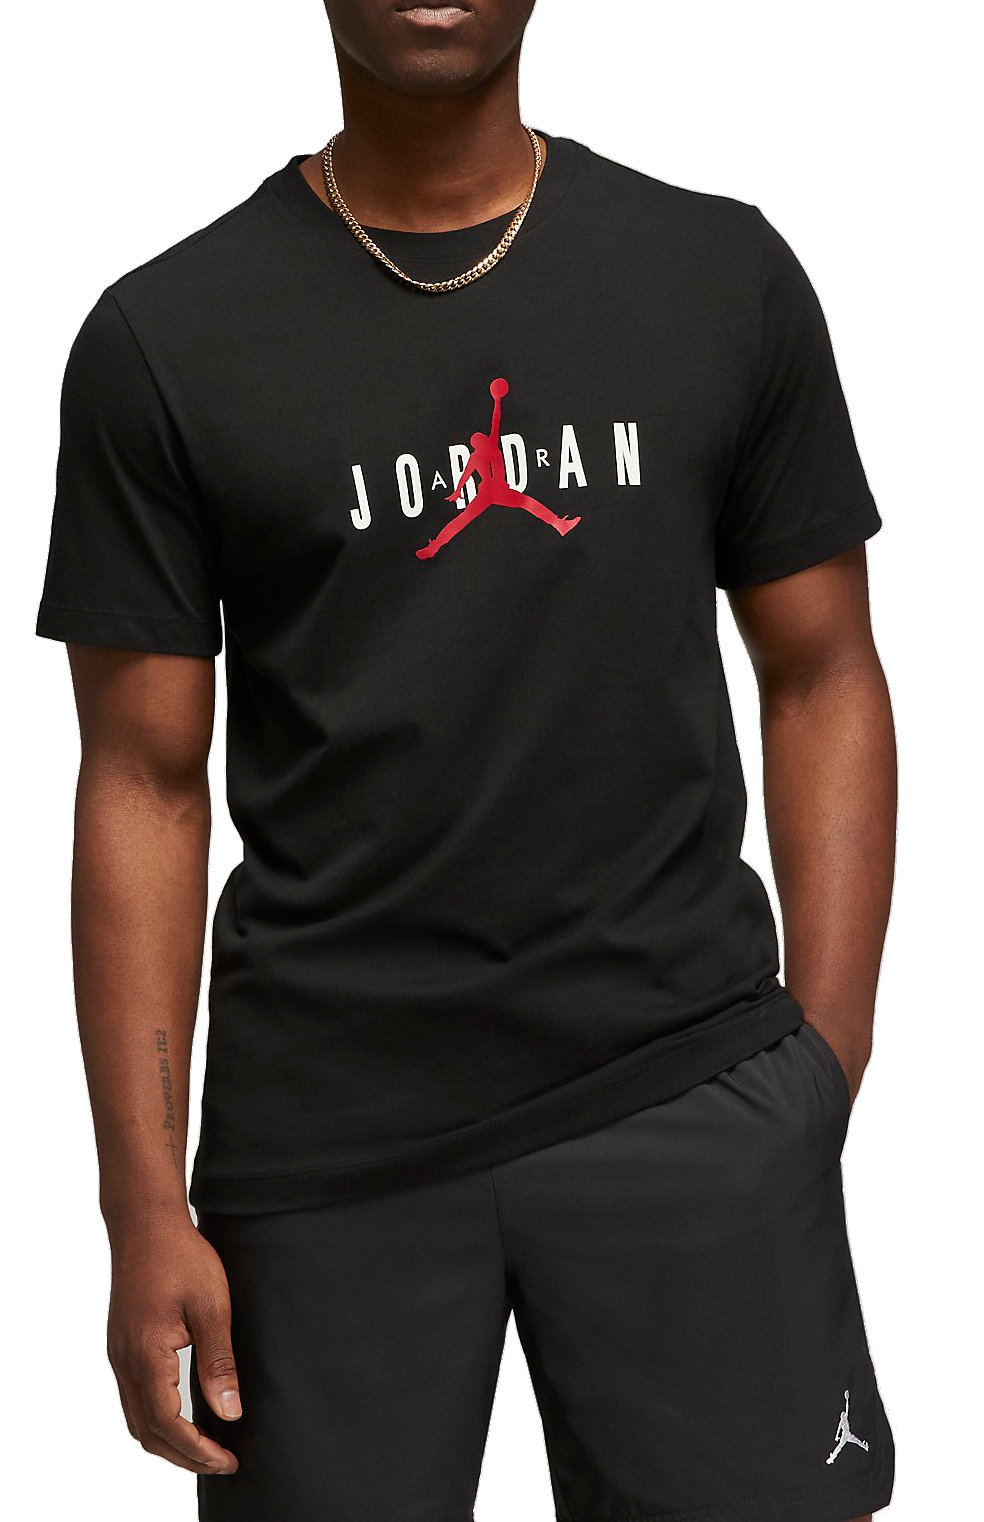 recursos humanos Irregularidades Evento Camiseta Jordan Air Tee - 11teamsports.es